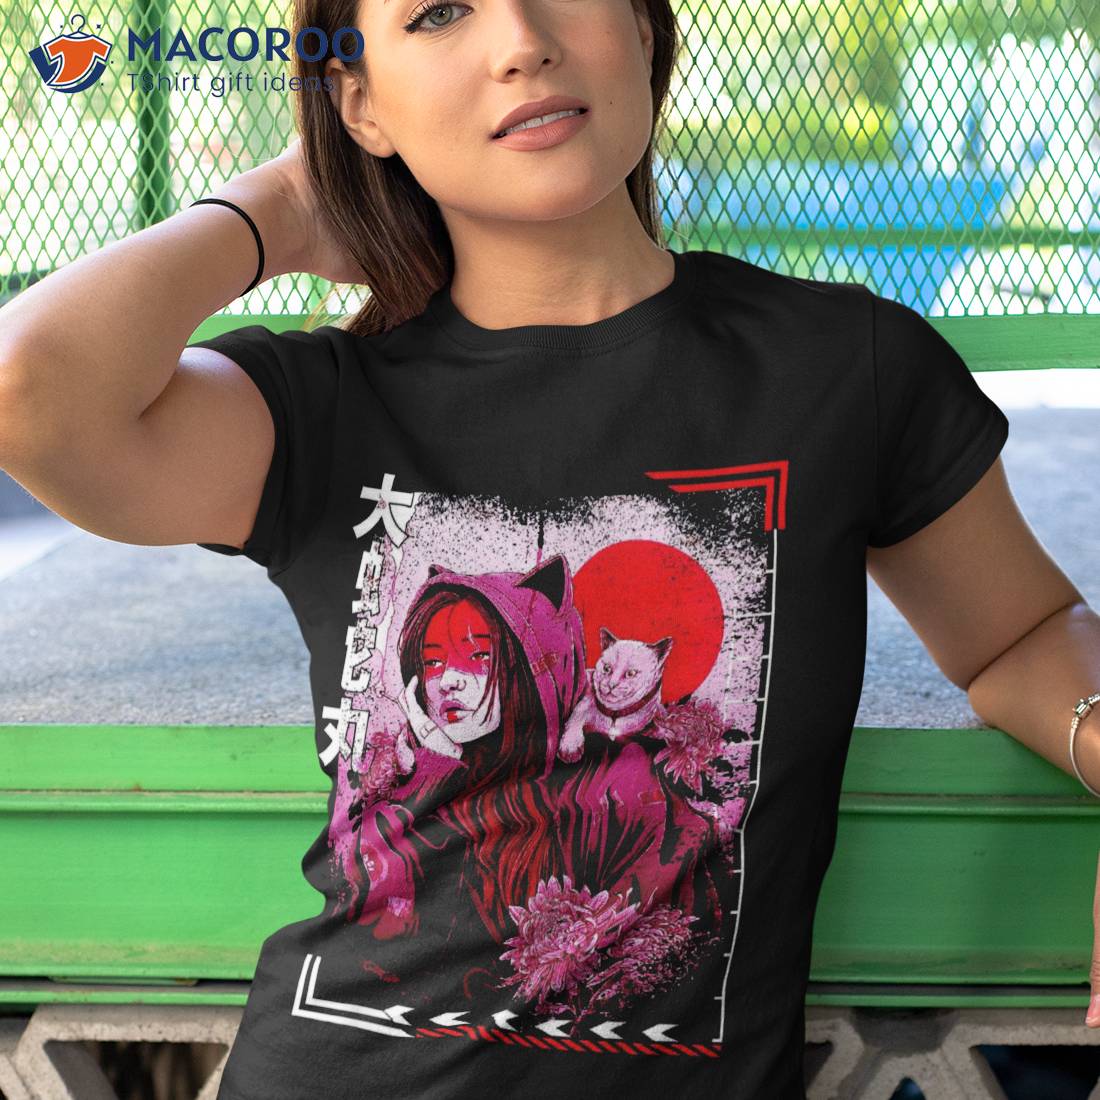 https://images.macoroo.com/wp-content/uploads/2023/06/vintage-anime-fan-art-cosplay-cool-cat-for-girls-boys-shirt-tshirt-1.jpg